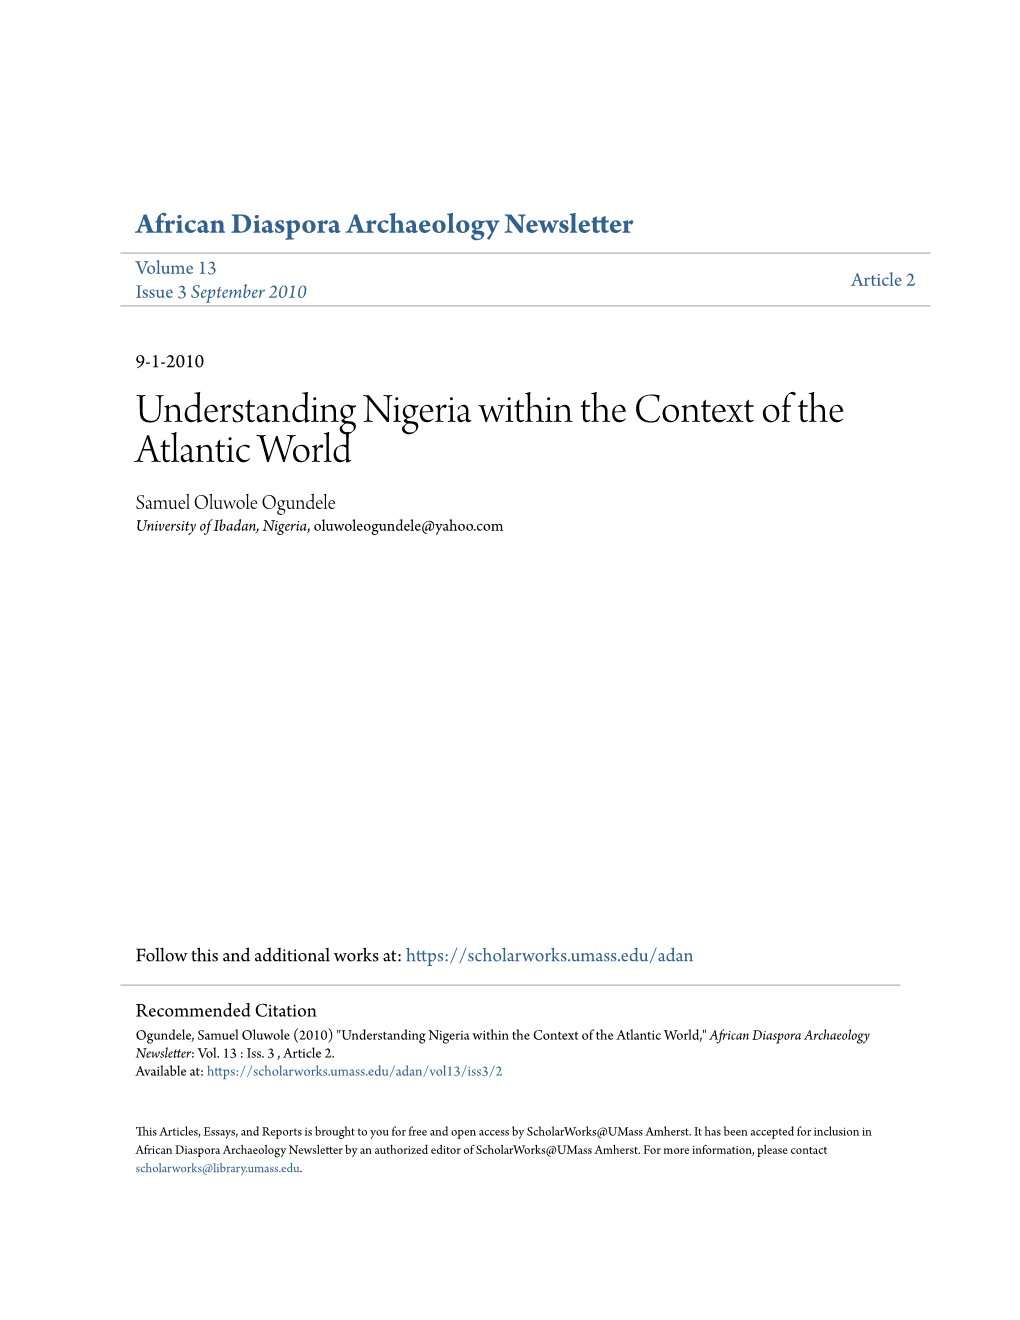 Understanding Nigeria Within the Context of the Atlantic World Samuel Oluwole Ogundele University of Ibadan, Nigeria, Oluwoleogundele@Yahoo.Com